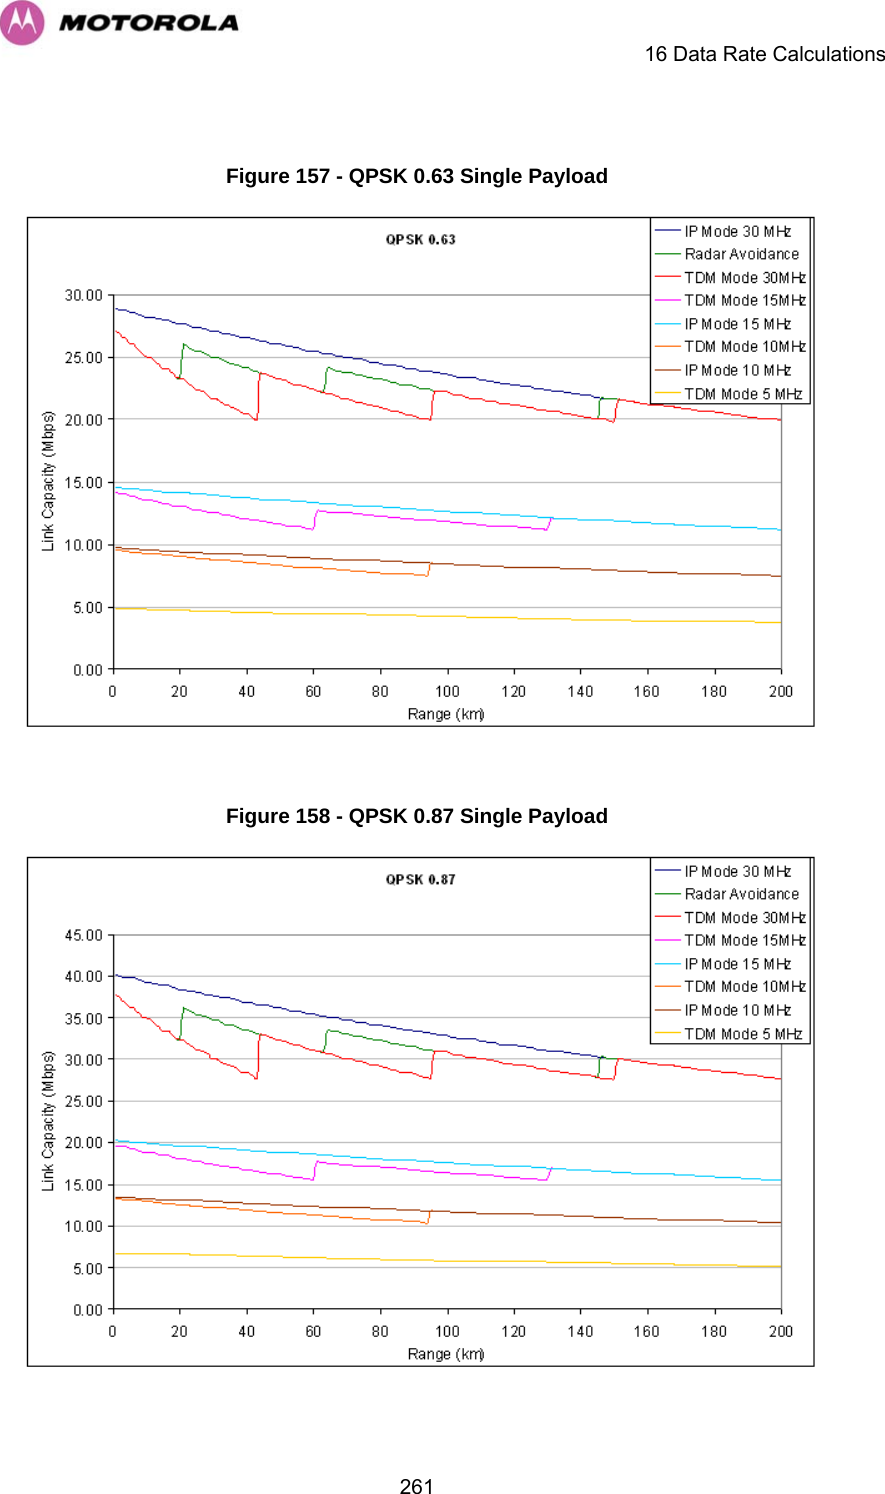     16 Data Rate Calculations  261 Figure 157 - QPSK 0.63 Single Payload   Figure 158 - QPSK 0.87 Single Payload   